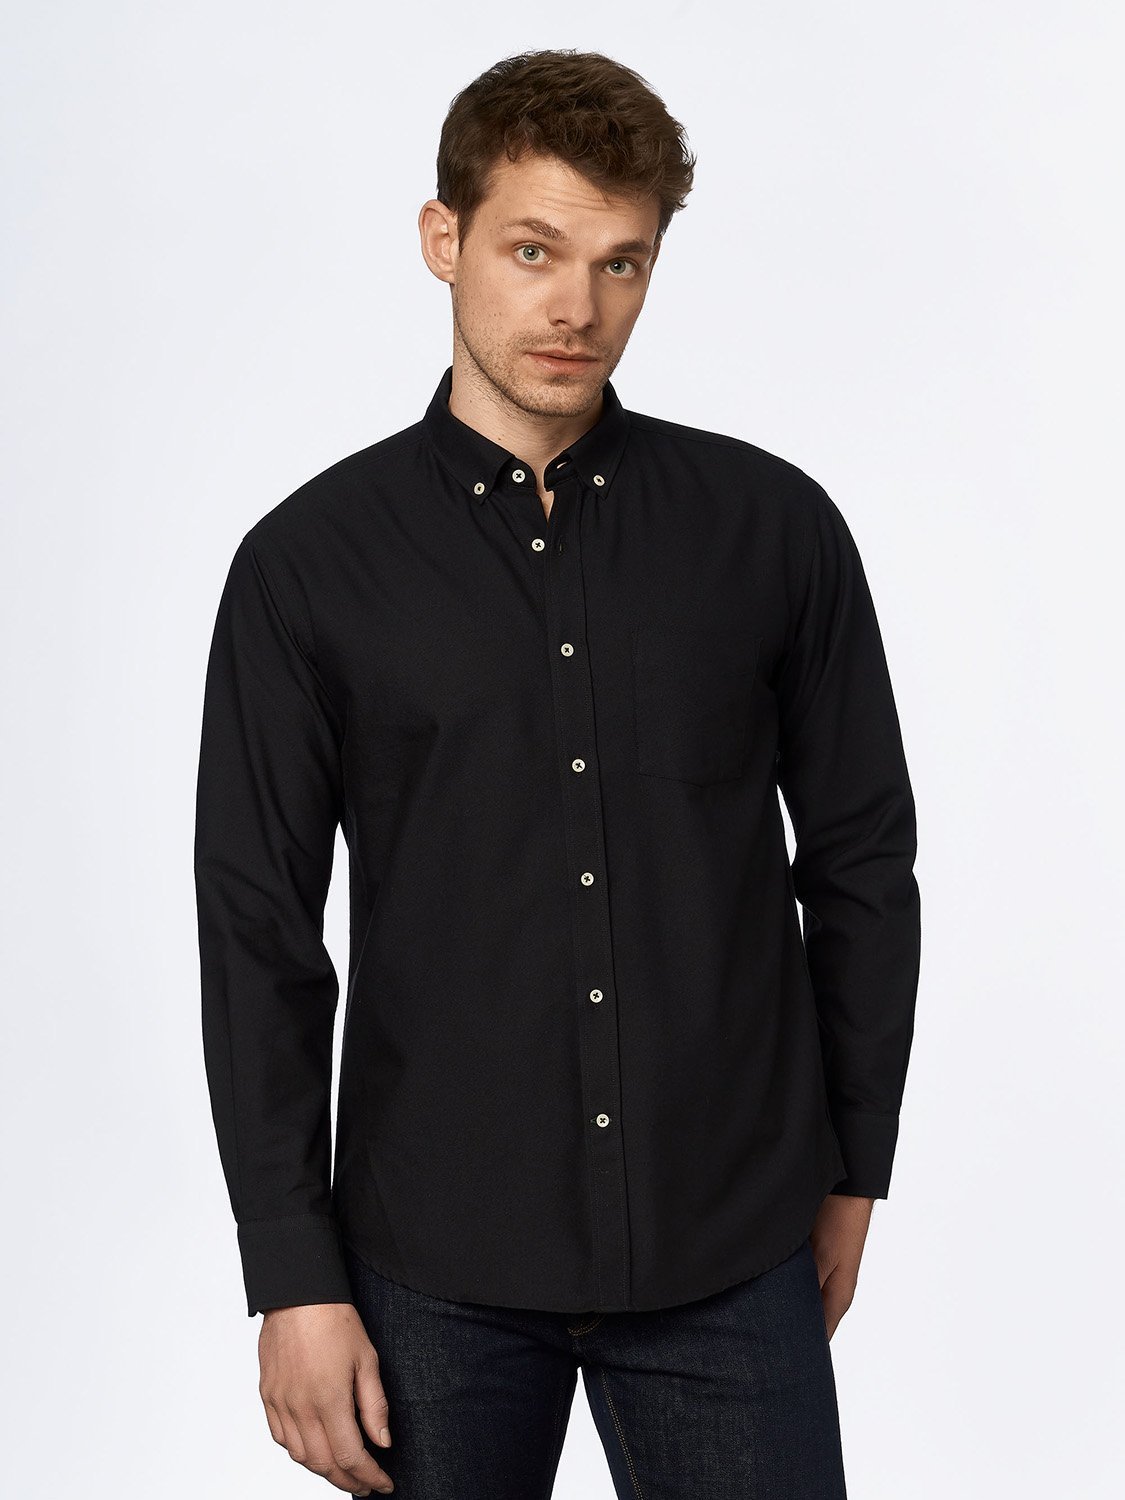 carpasus sustainable organic cotton oxford shirt black. Nachhaltiges Carpasus Oxford Hemd aus Bio Baumwolle in Schwarz